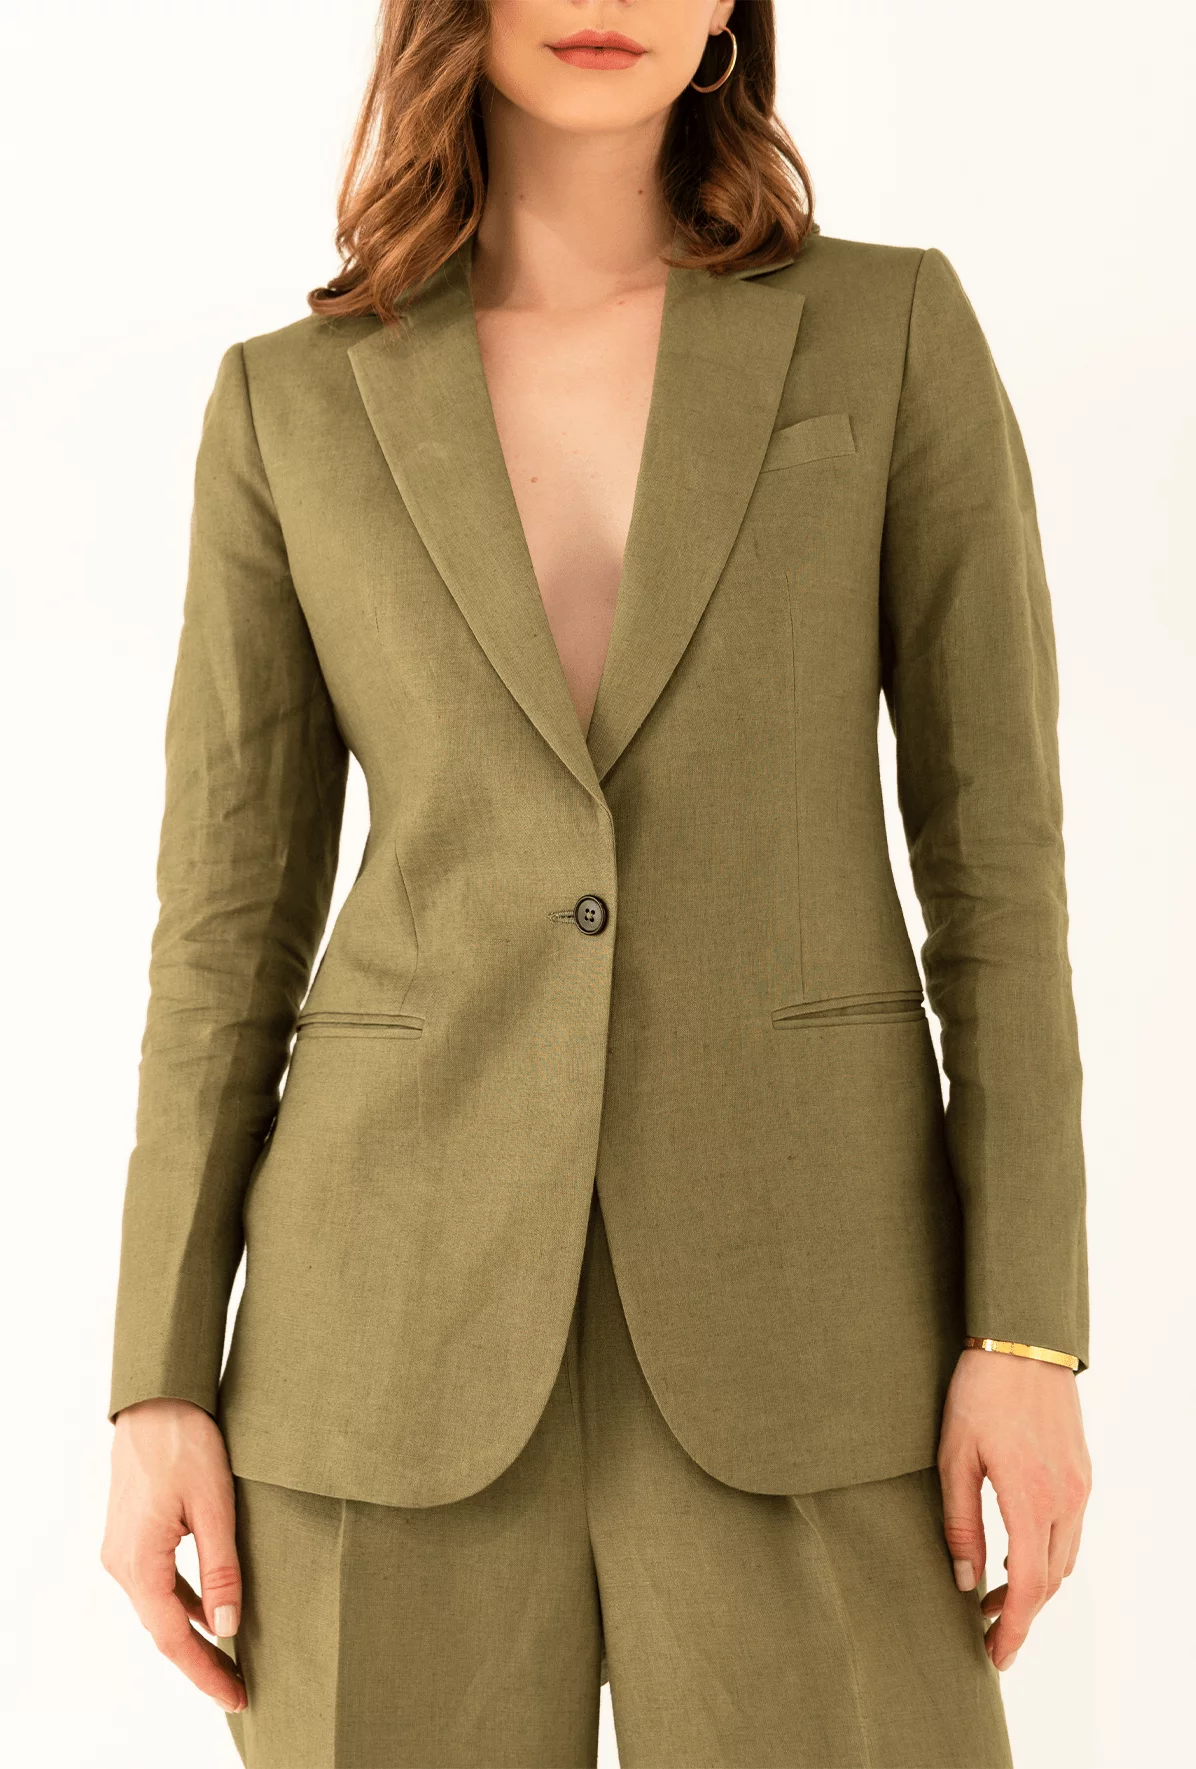 Linen - Resham - Buy Salwar Suits for Women Online in Latest Designs